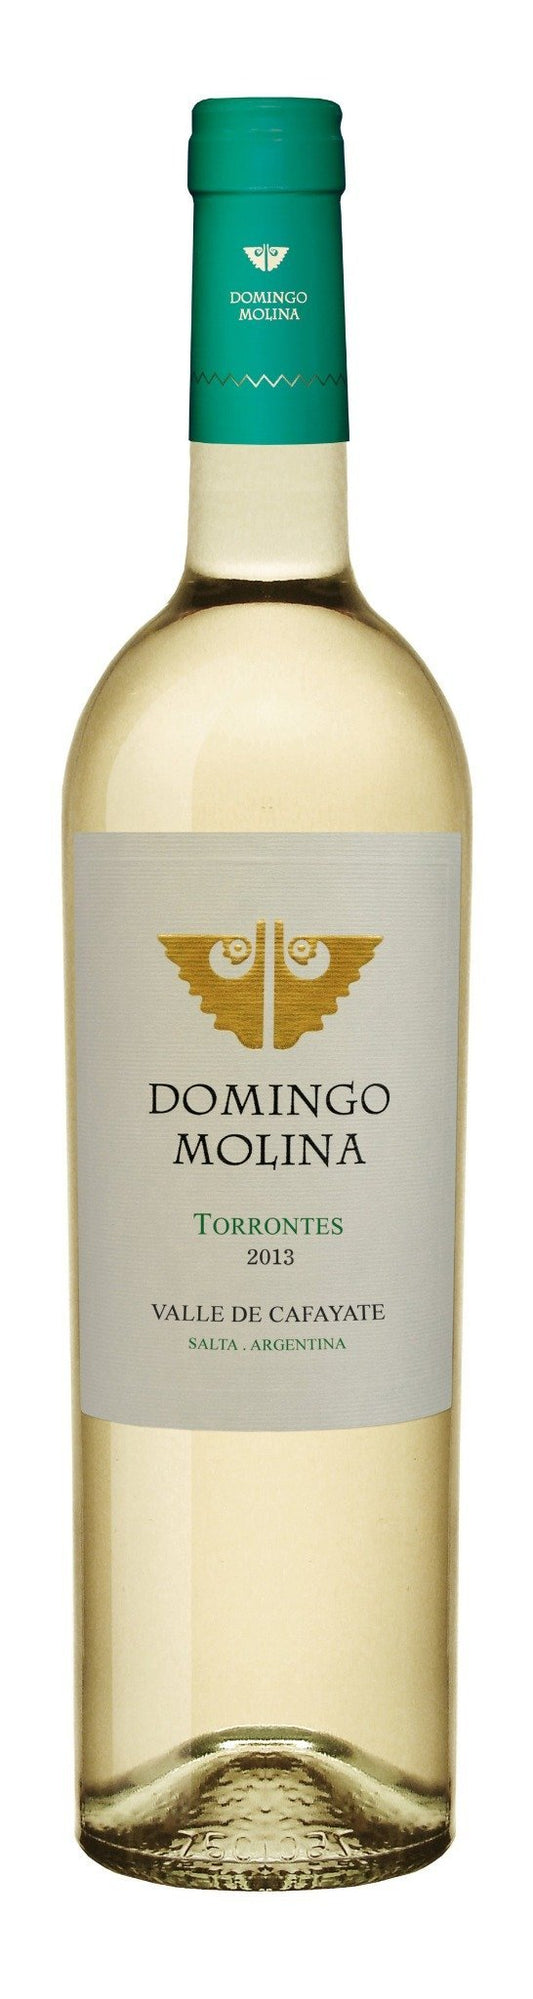 Domingo Molina Torrontes - Mi-bodeguita.com